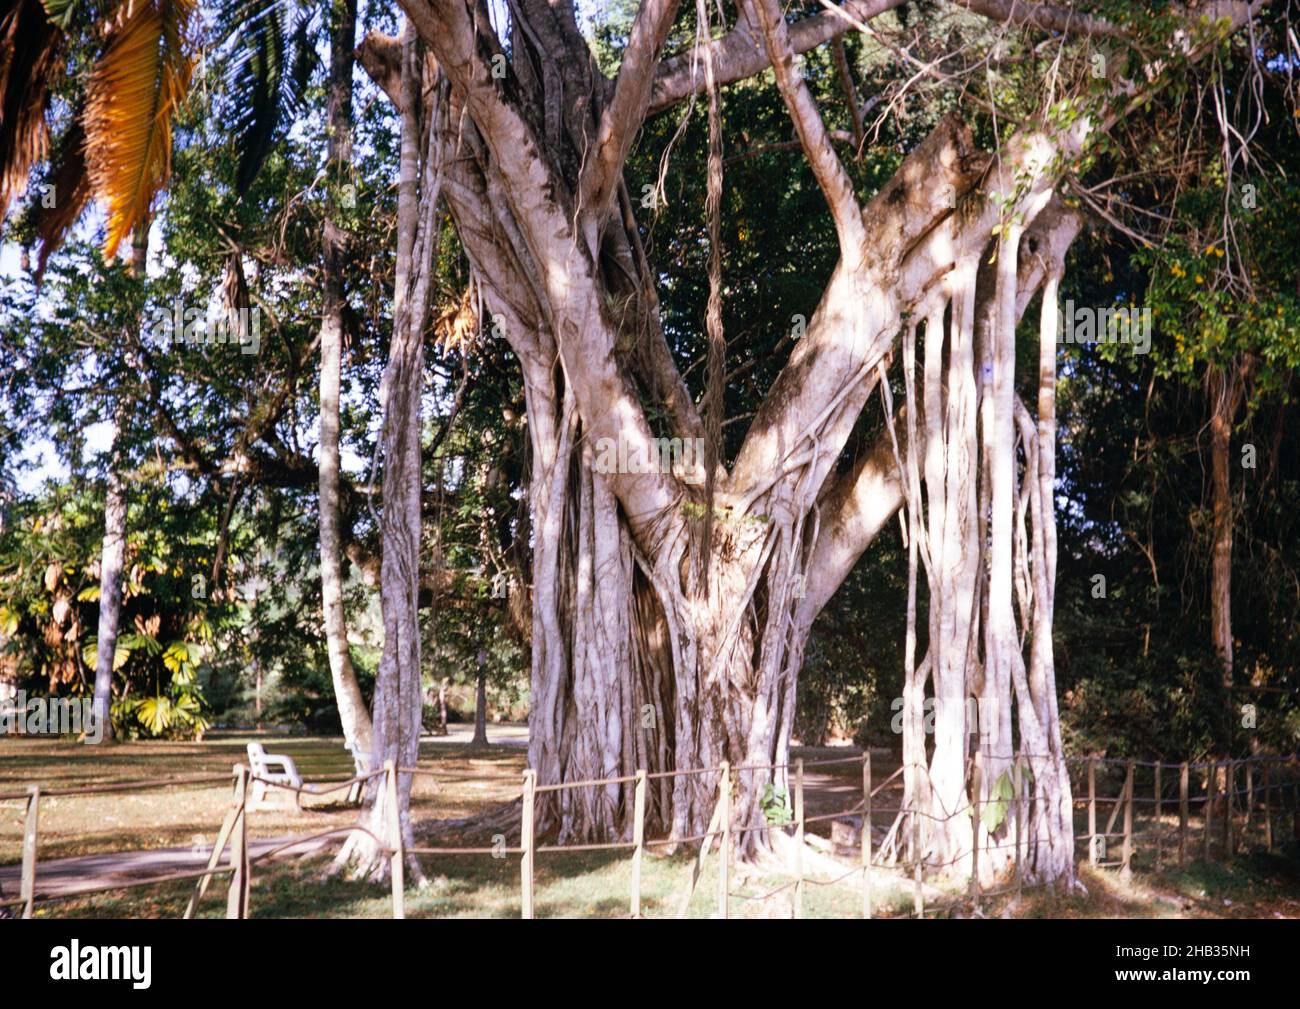 Banyan epiphyte plant, Ficus benjamina fig parasite, growing on tree in the botanical gardens, Port of Spain, Trinidad 1963 Stock Photo